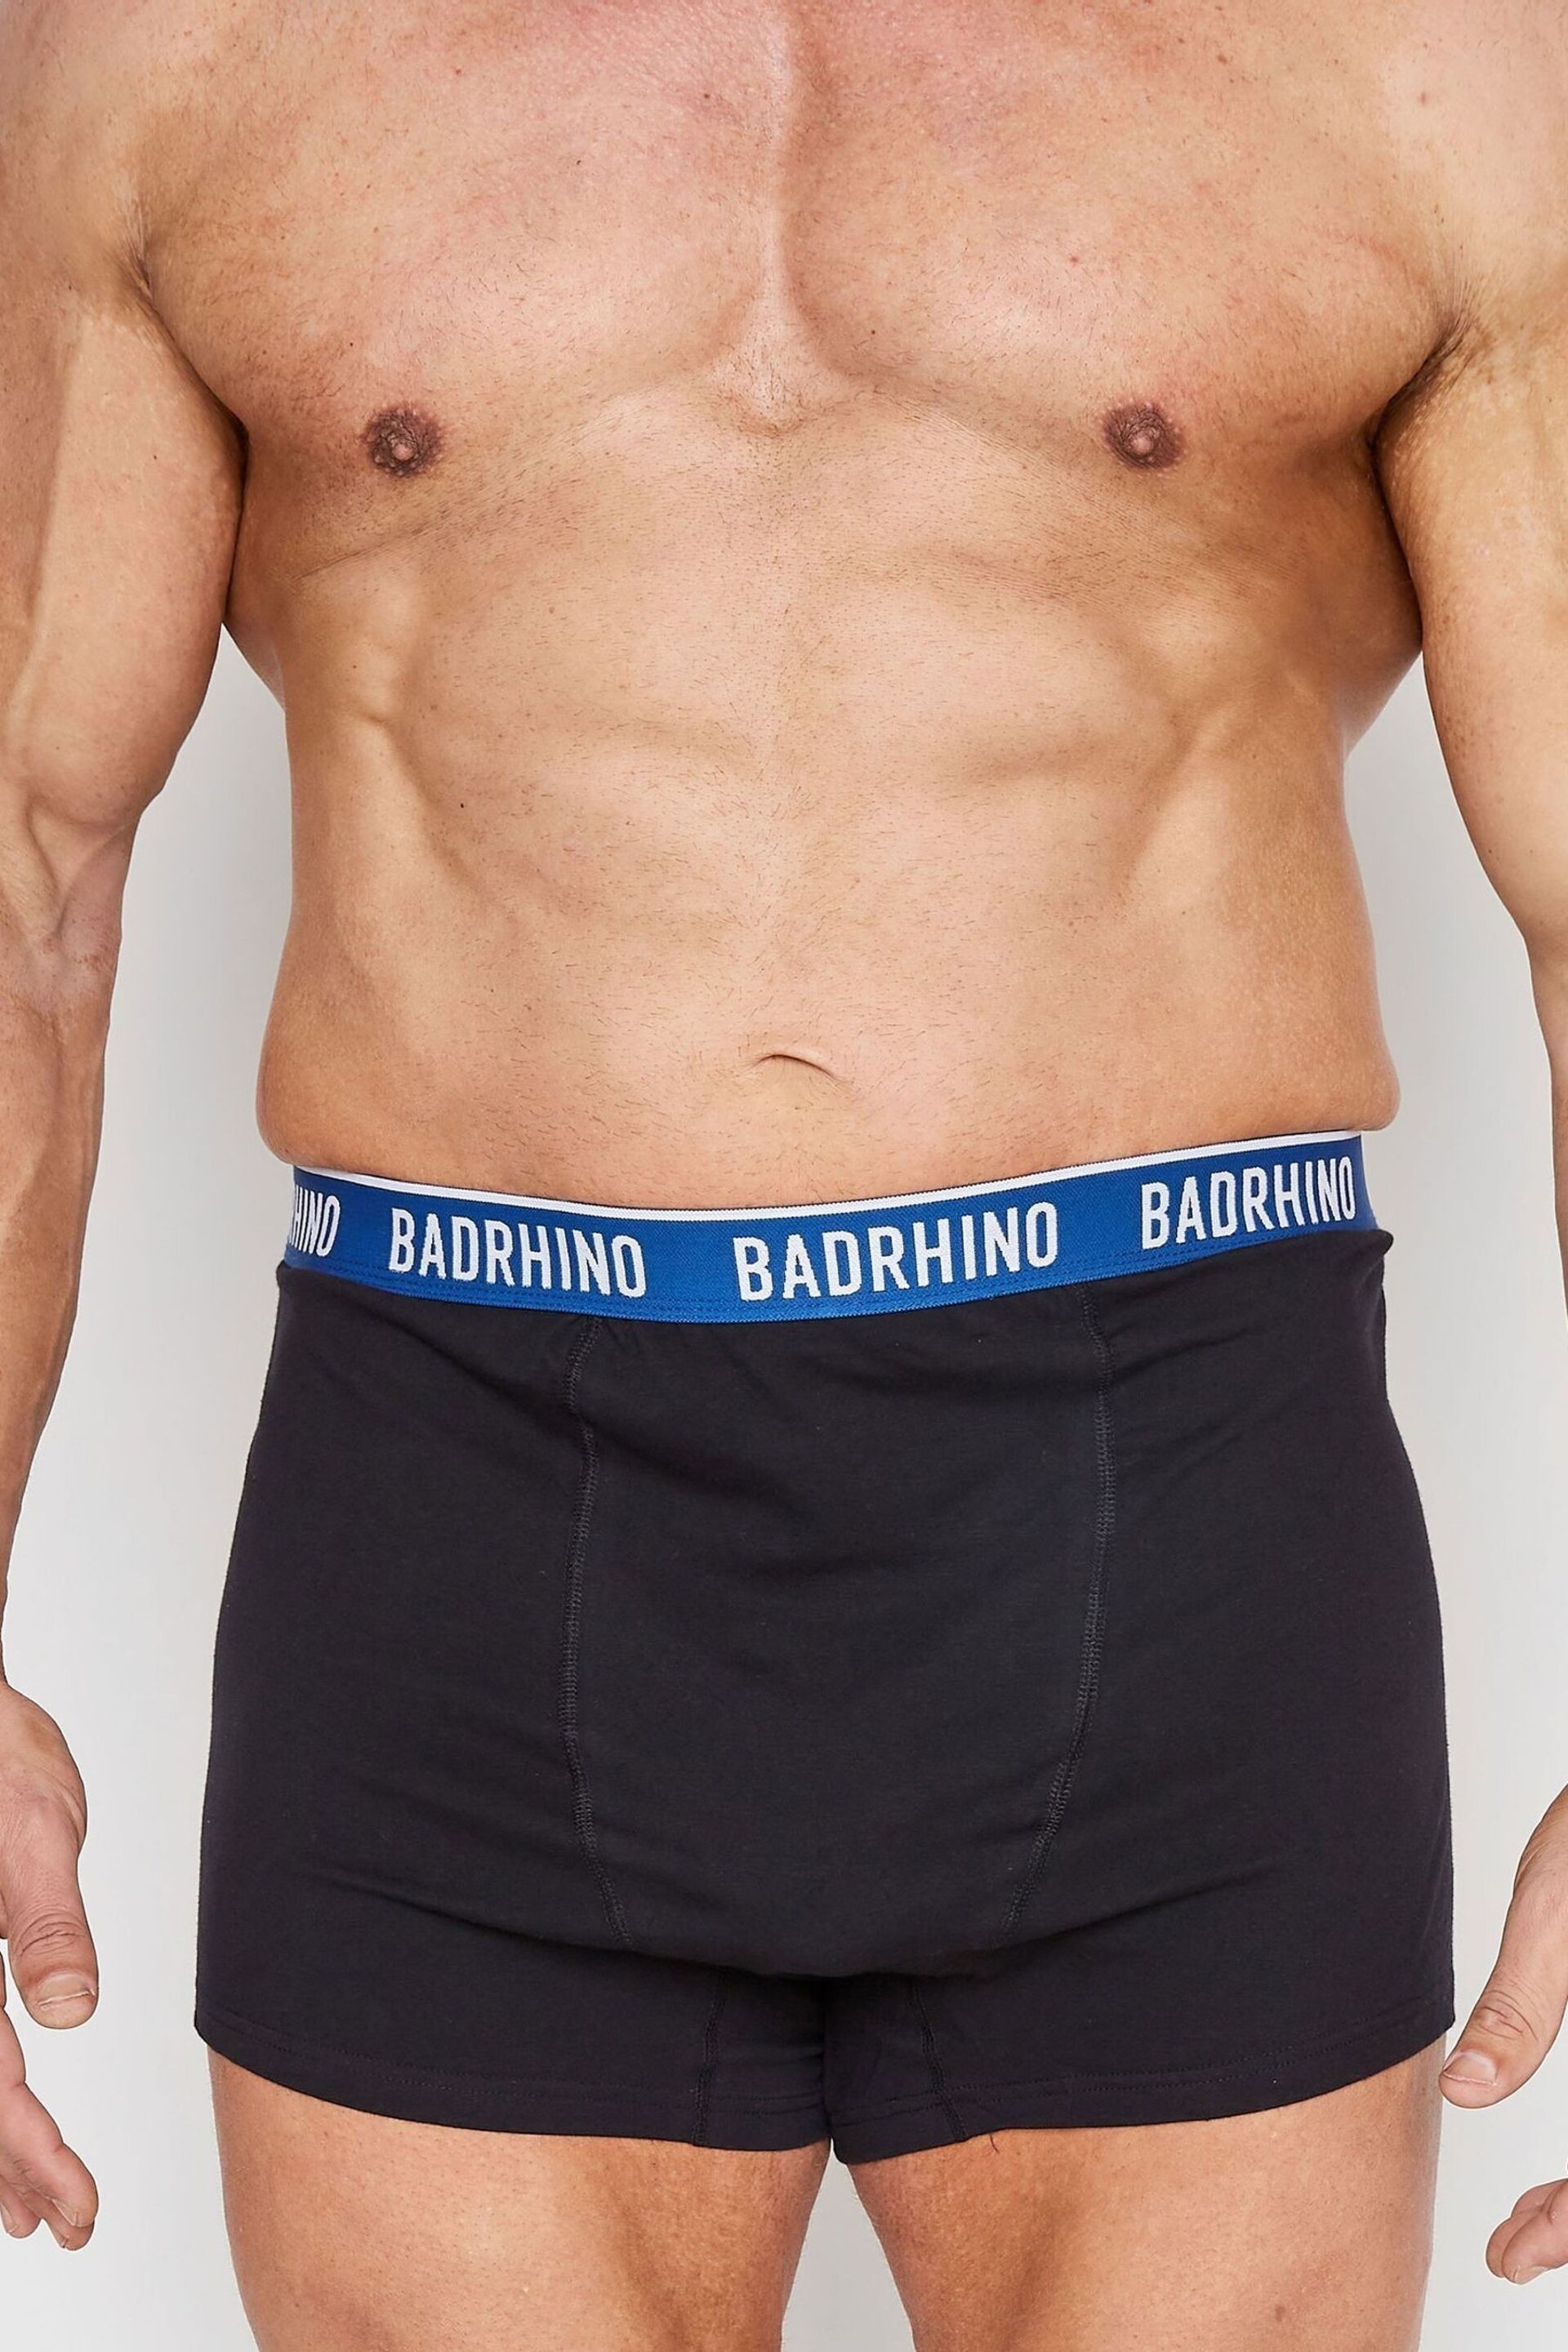 BadRhino Big & Tall Black Waistband Boxers 3 Pack - Image 4 of 4